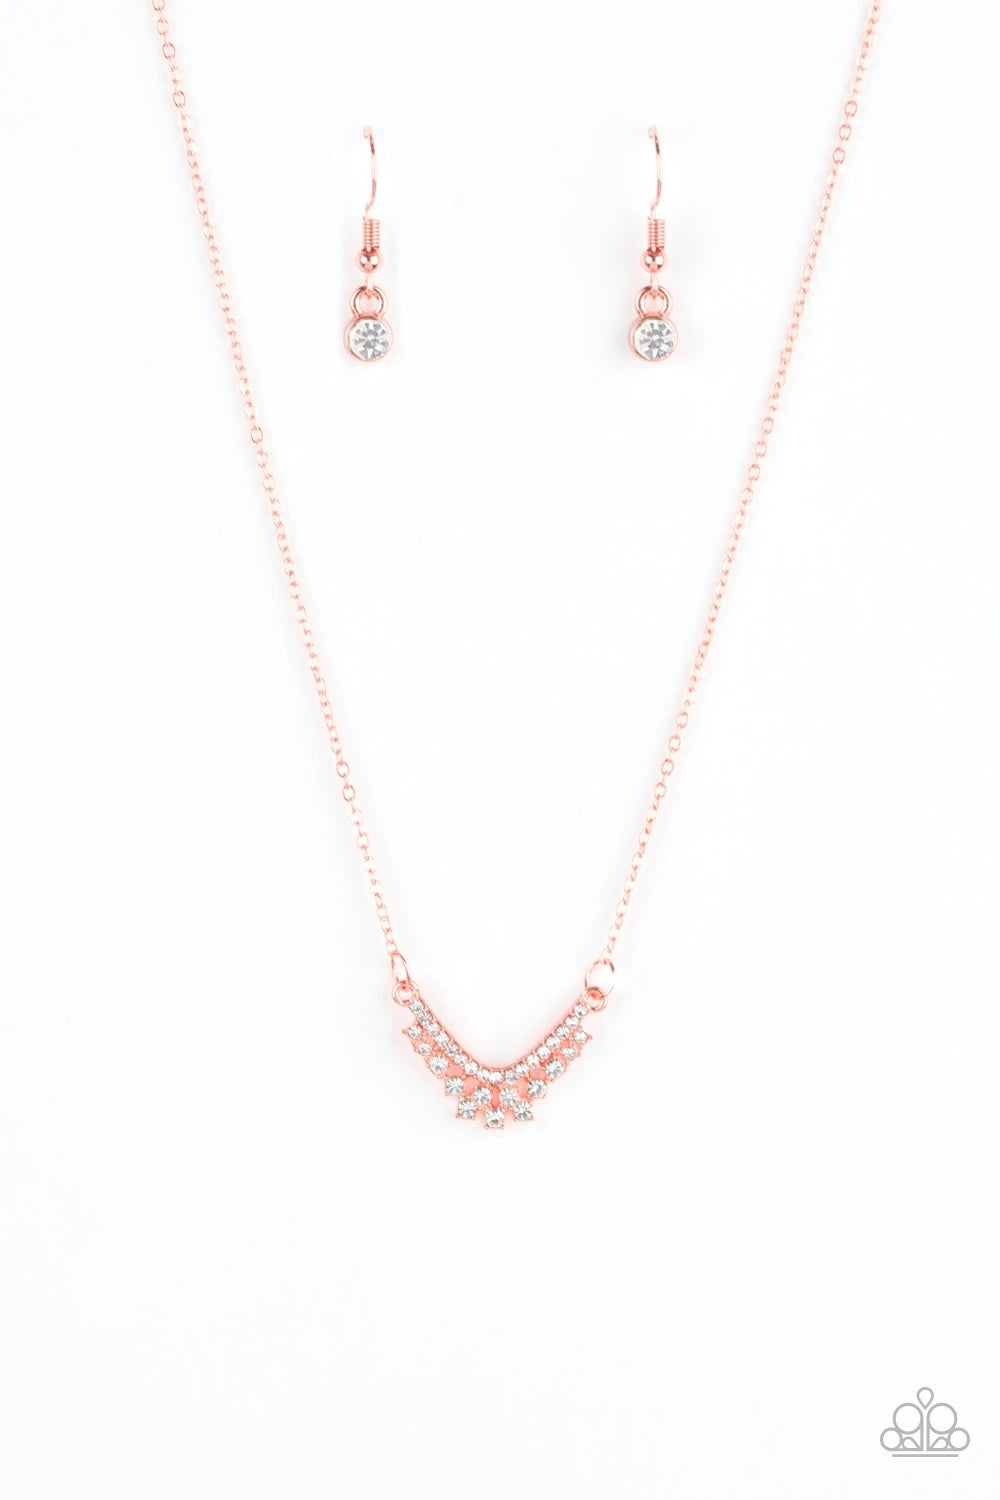 Classically Classic Copper Necklace freeshipping - JewLz4u Gemstone Gallery